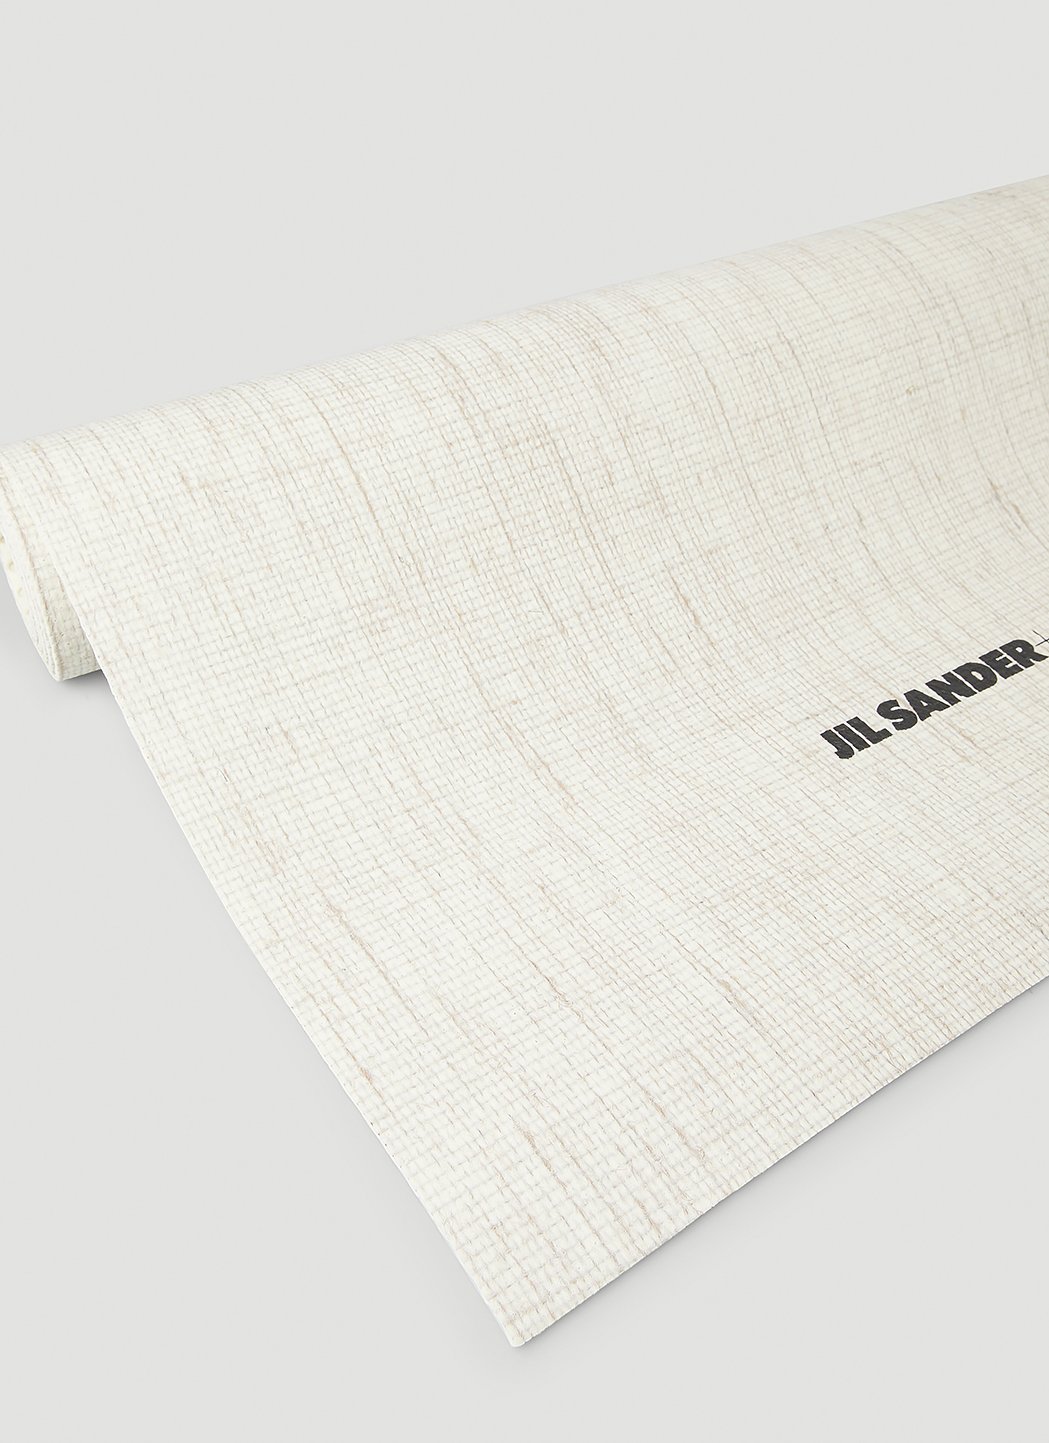 Jil Sander+ Logo Print Yoga Mat in White